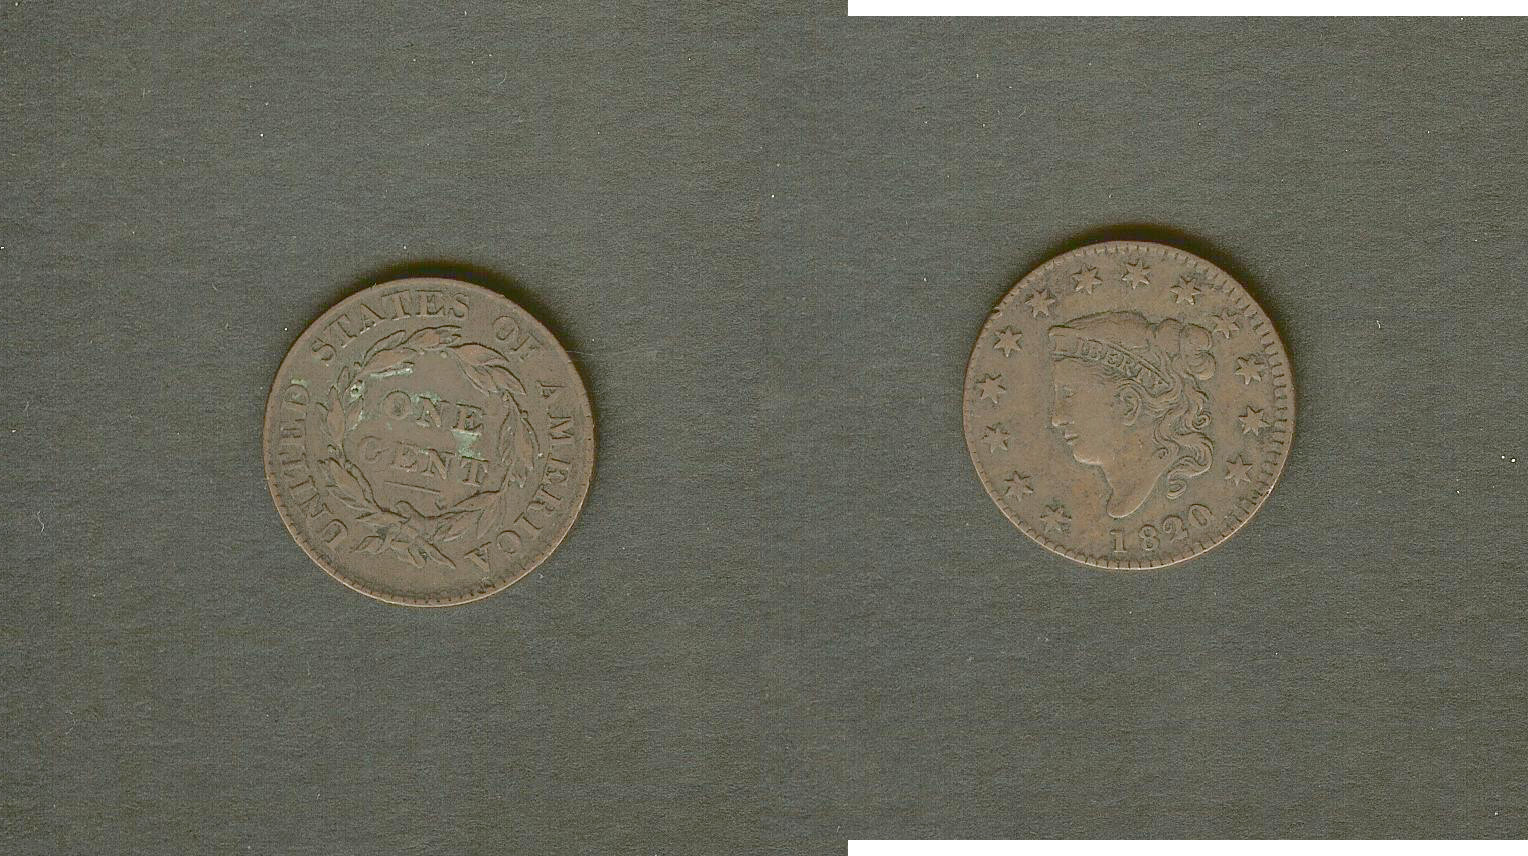 USA 1 cent matron head 1820 gVF